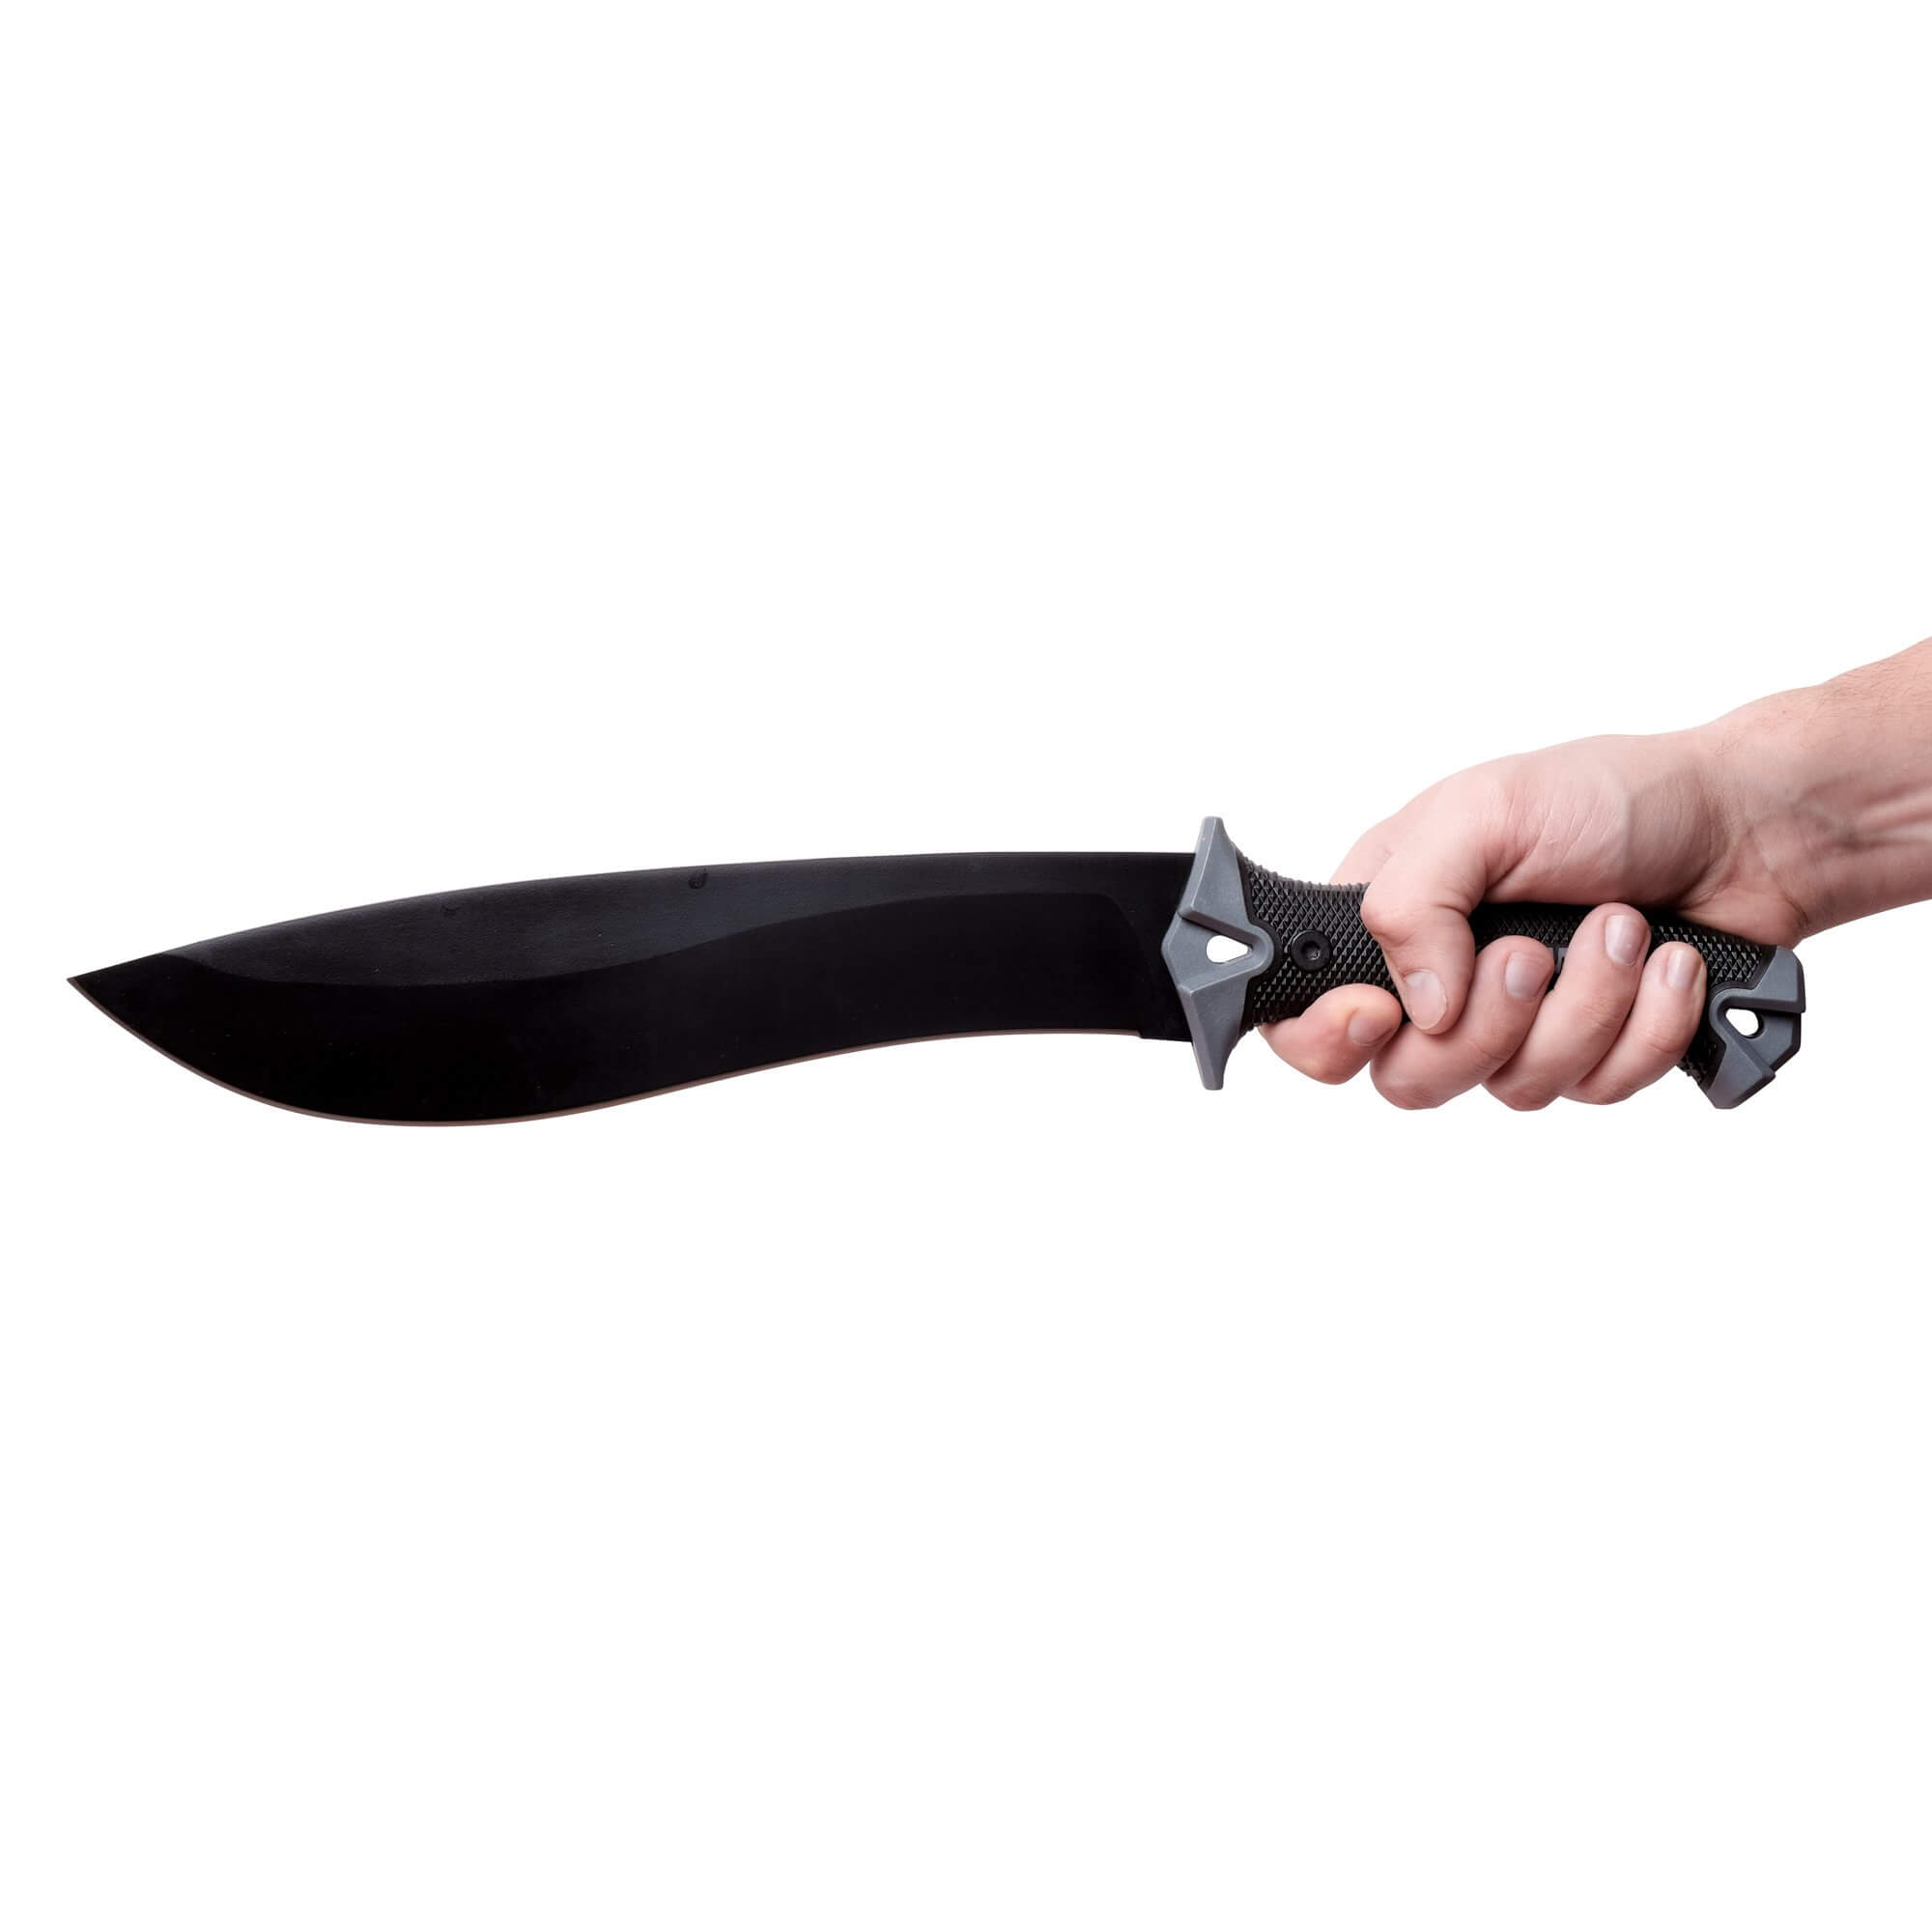 Kershaw Camp 10 (1077), custom bushcraft knives, bushcraft knife reviews, bushcraft knives amazon